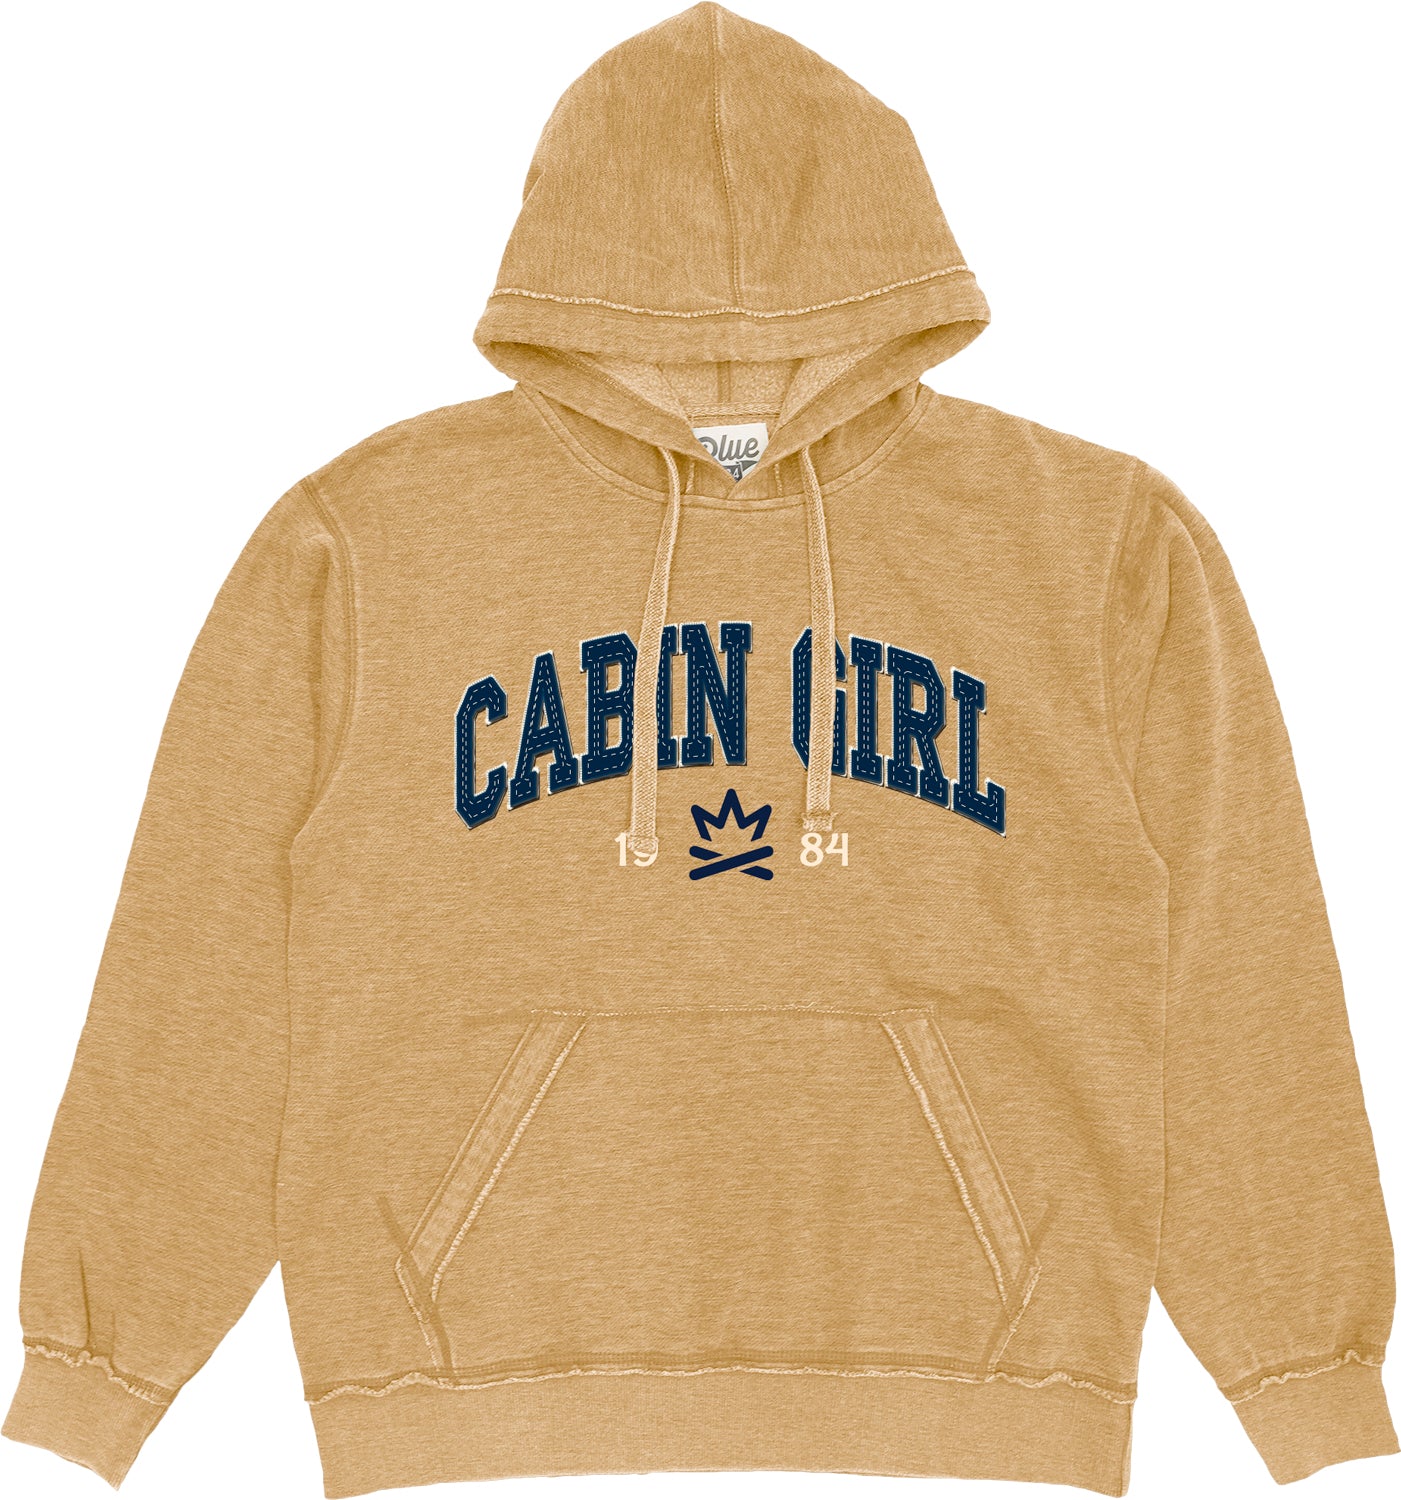 Cabin Girl Cozy Cross Stitch Hooded Fleece Sweatshirt